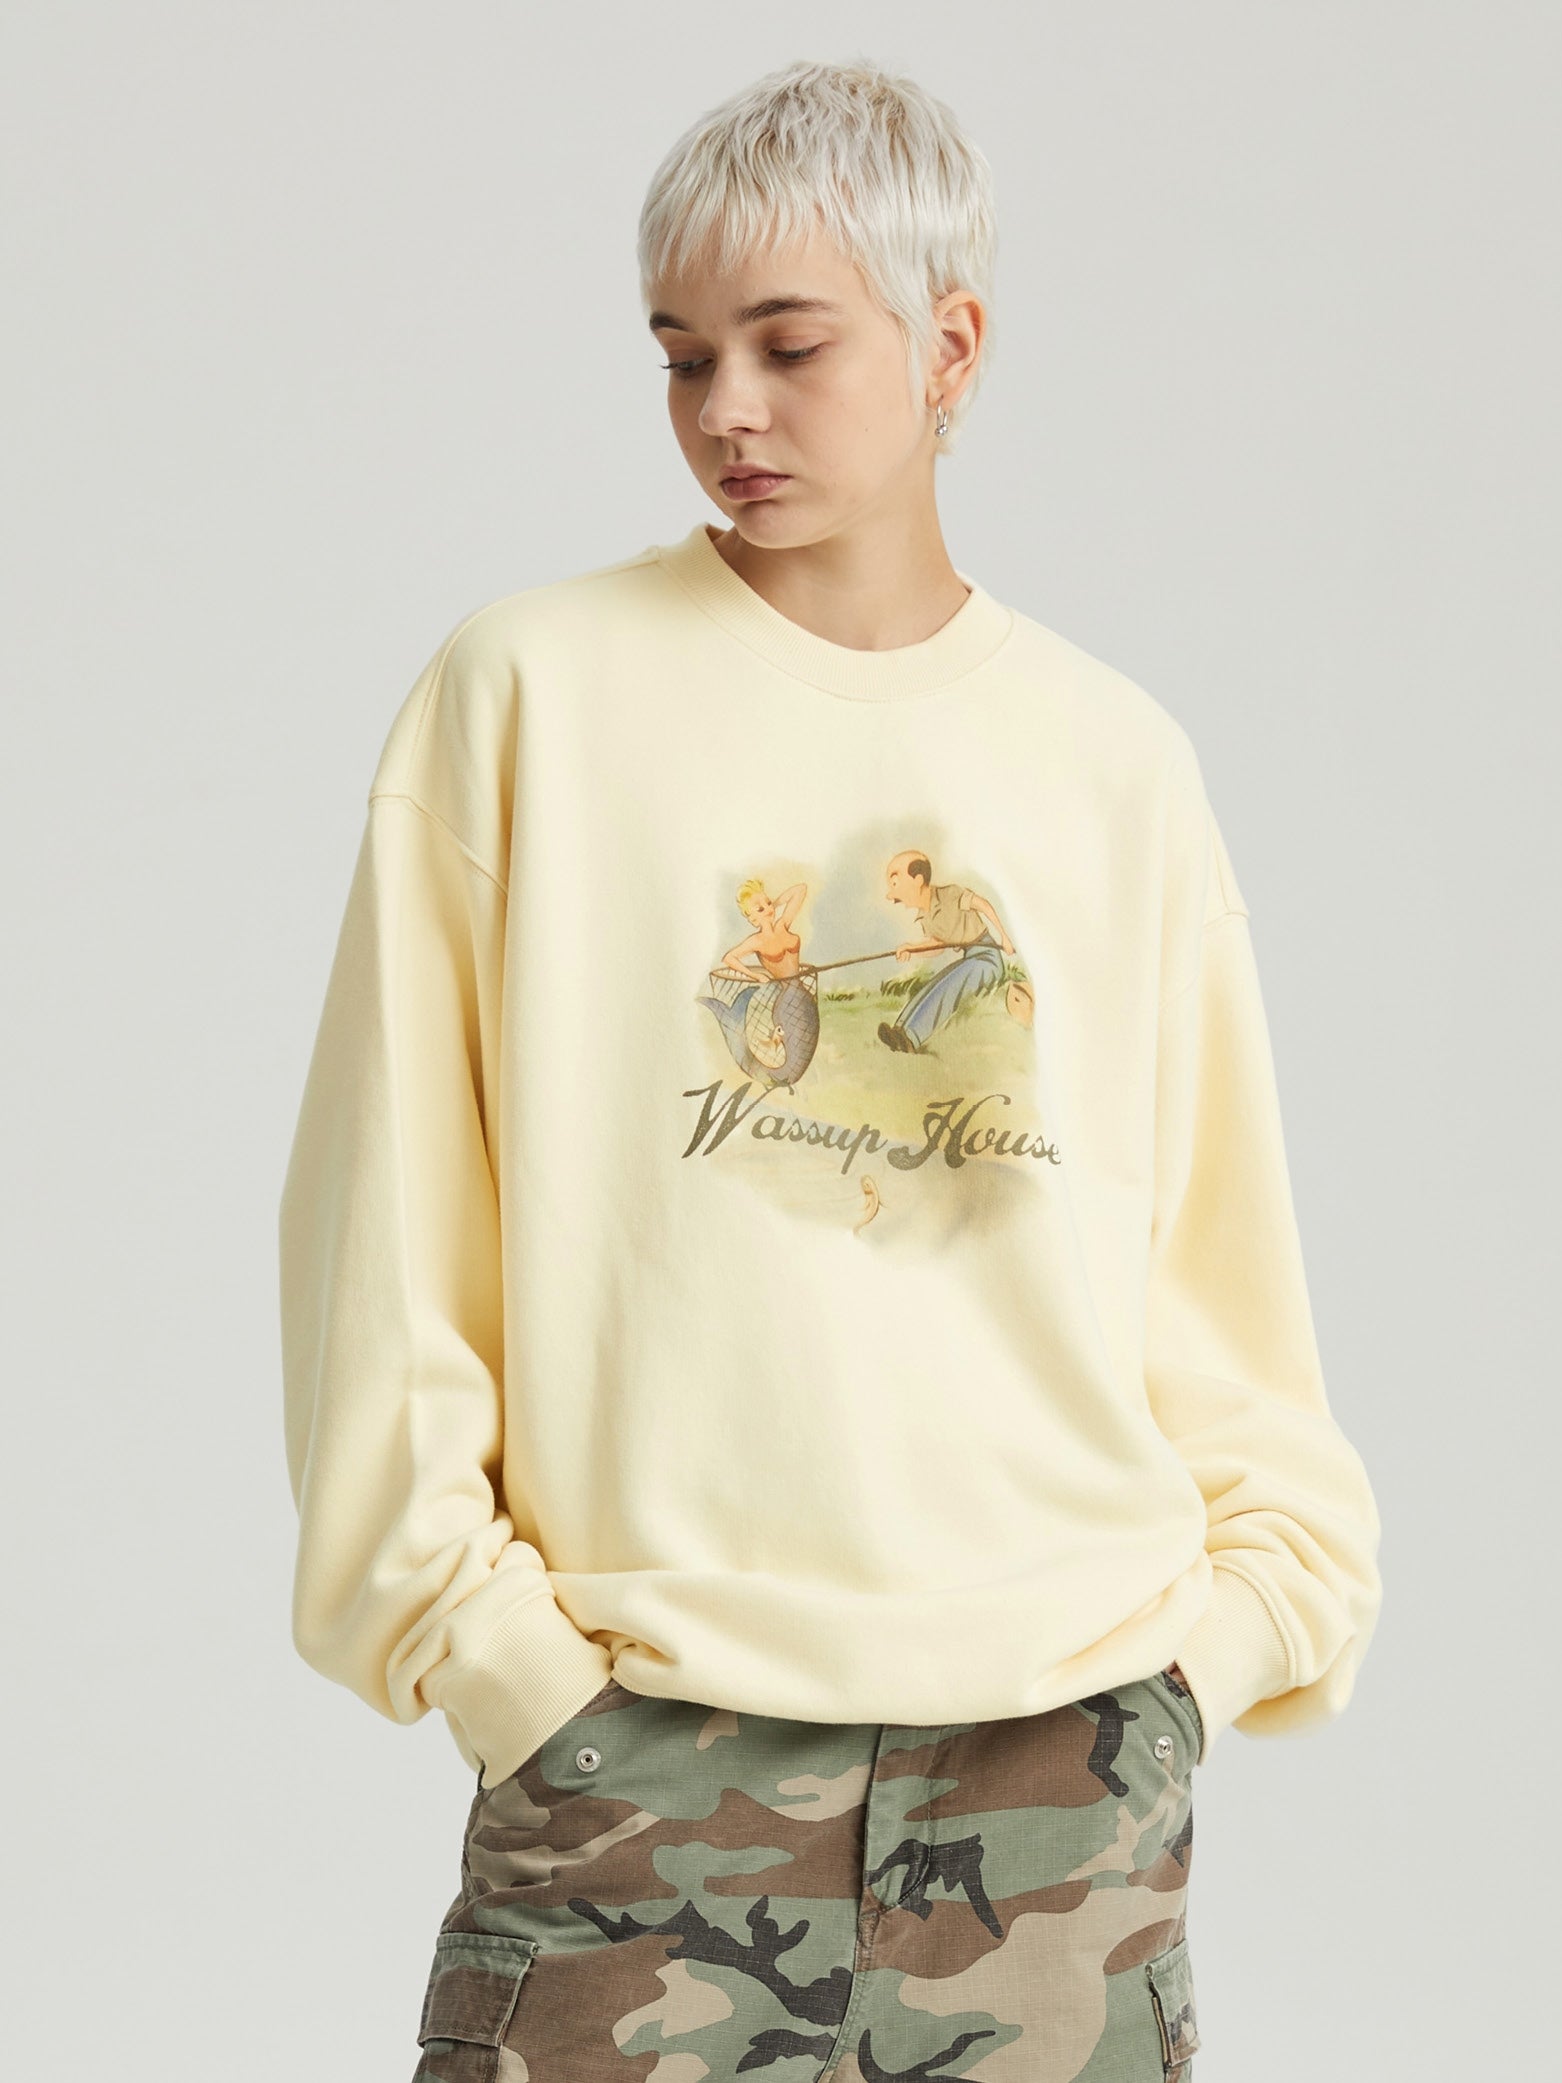 Whimsical Mermaid Tale Printed Sweatshirt - chiclara